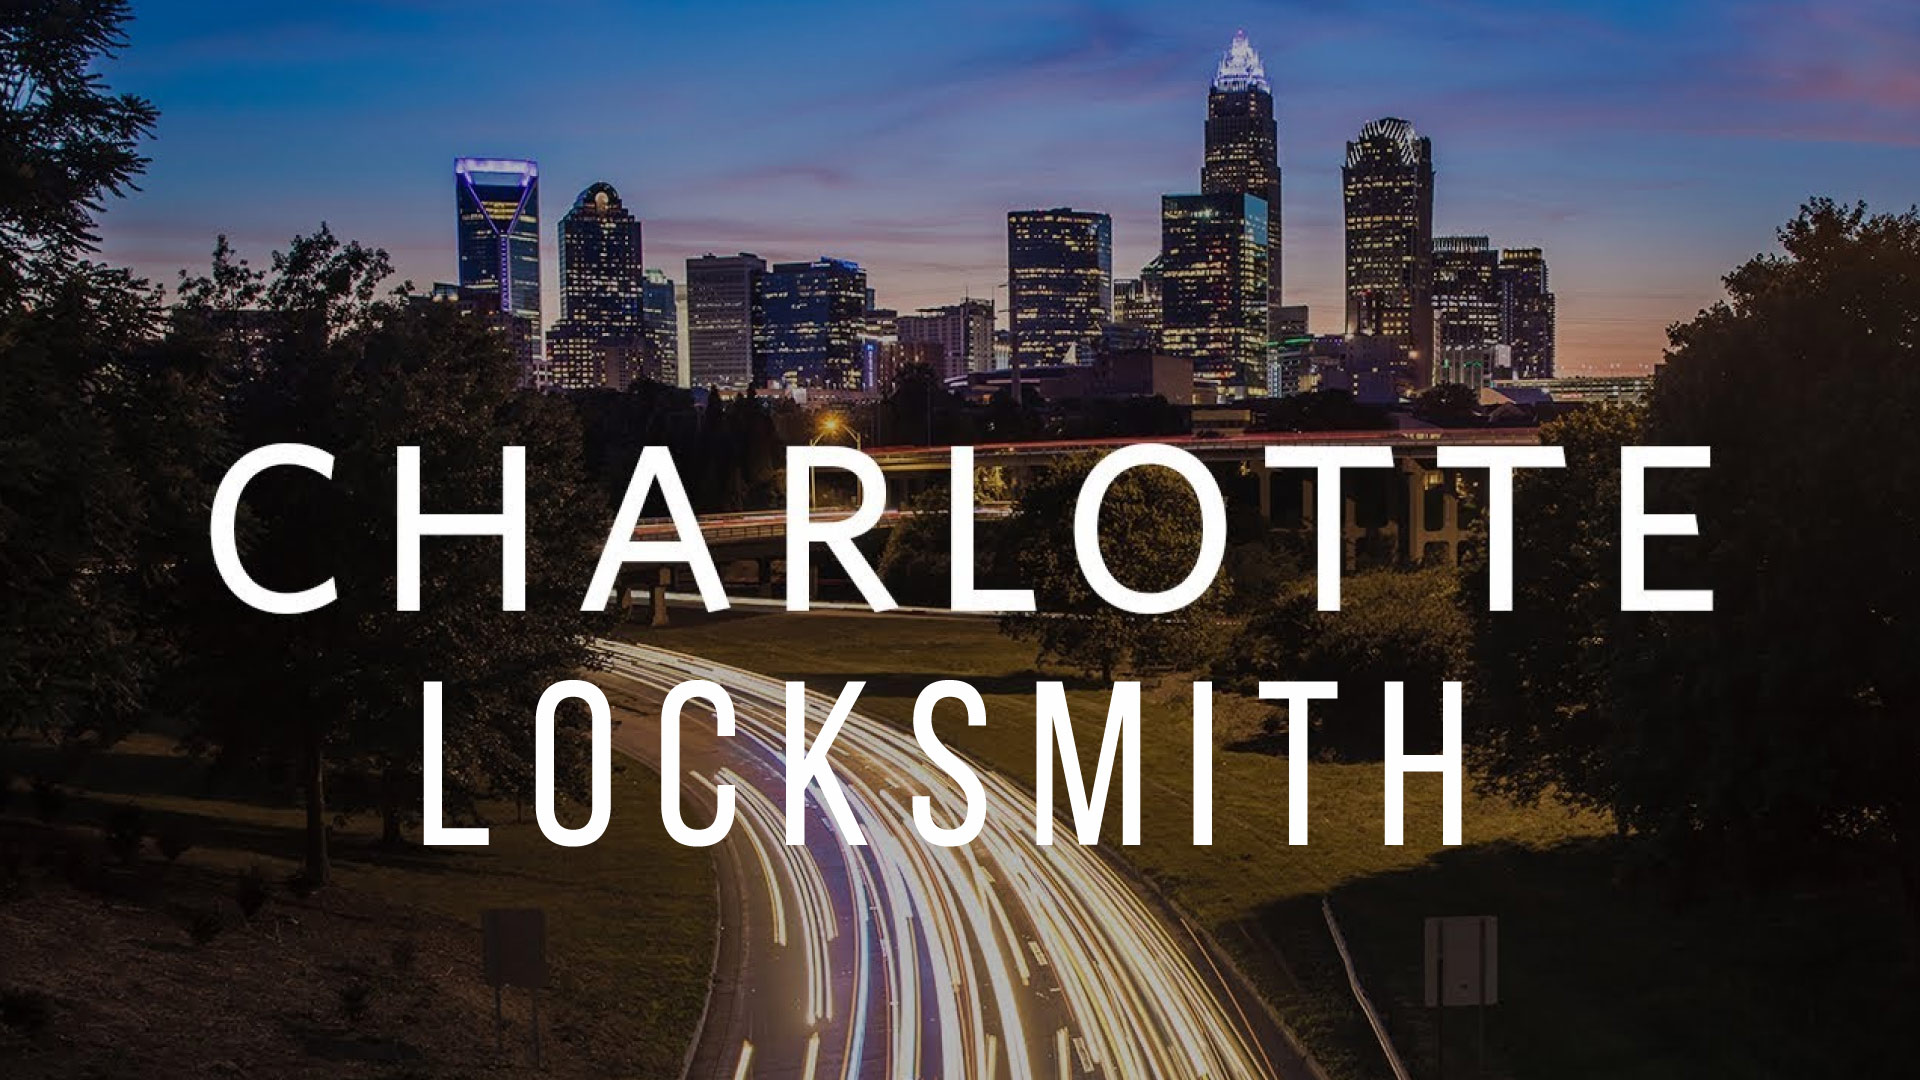 Locksmith Service in Charlotte, NC